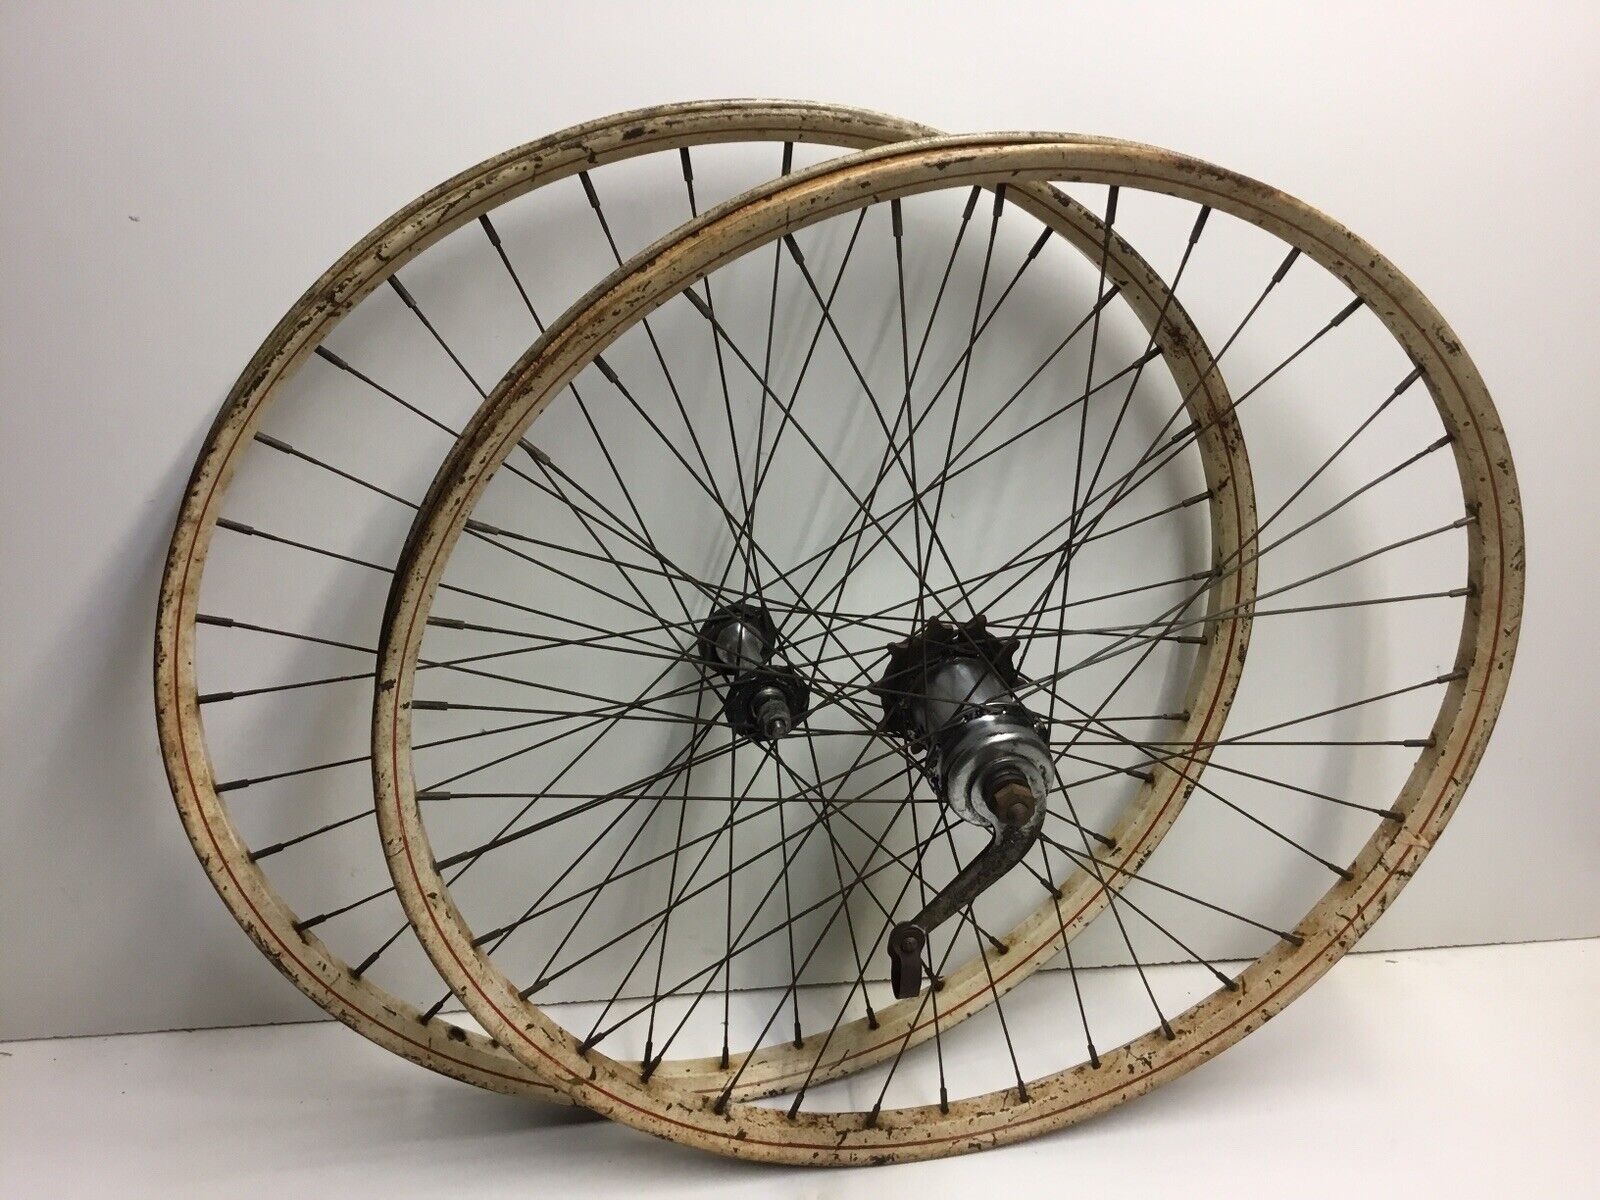 Prewar 1941 Schwinn Bicycle Wheels Rims 26” 2.125” Drop Center Painted Original 